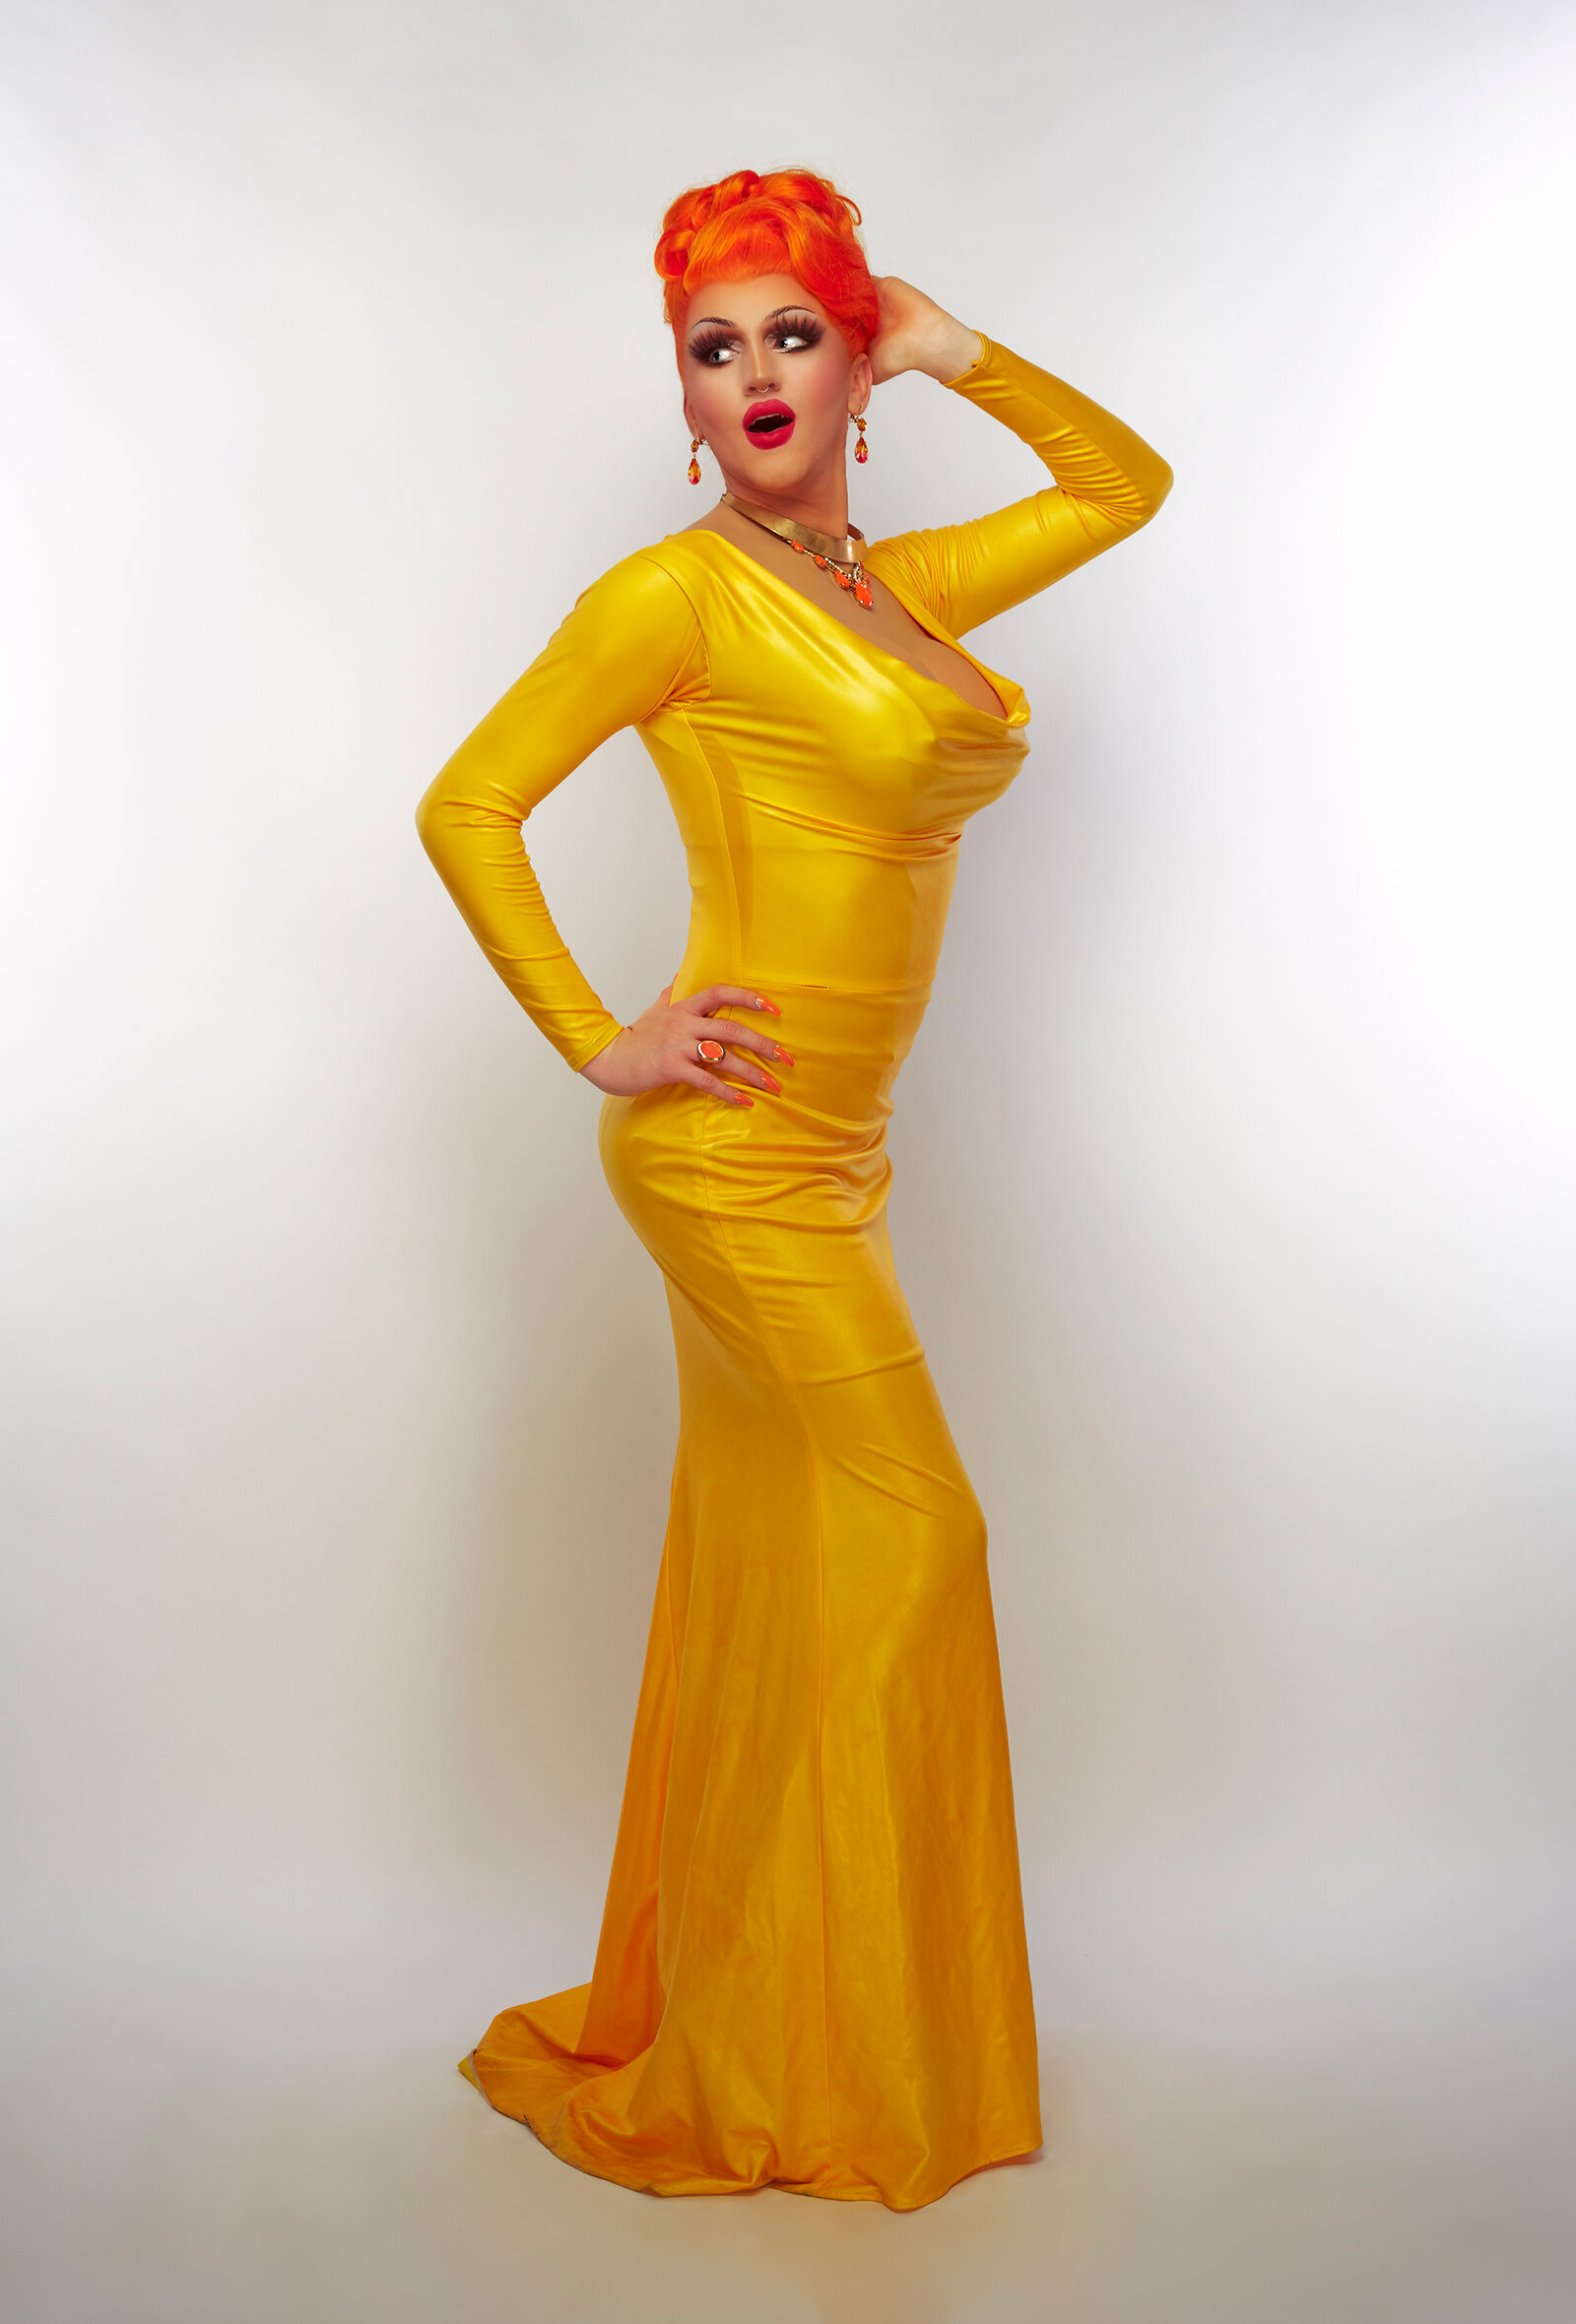 mynx-moscato-drag-royalty-drag-queen-make-up-sydney-artist